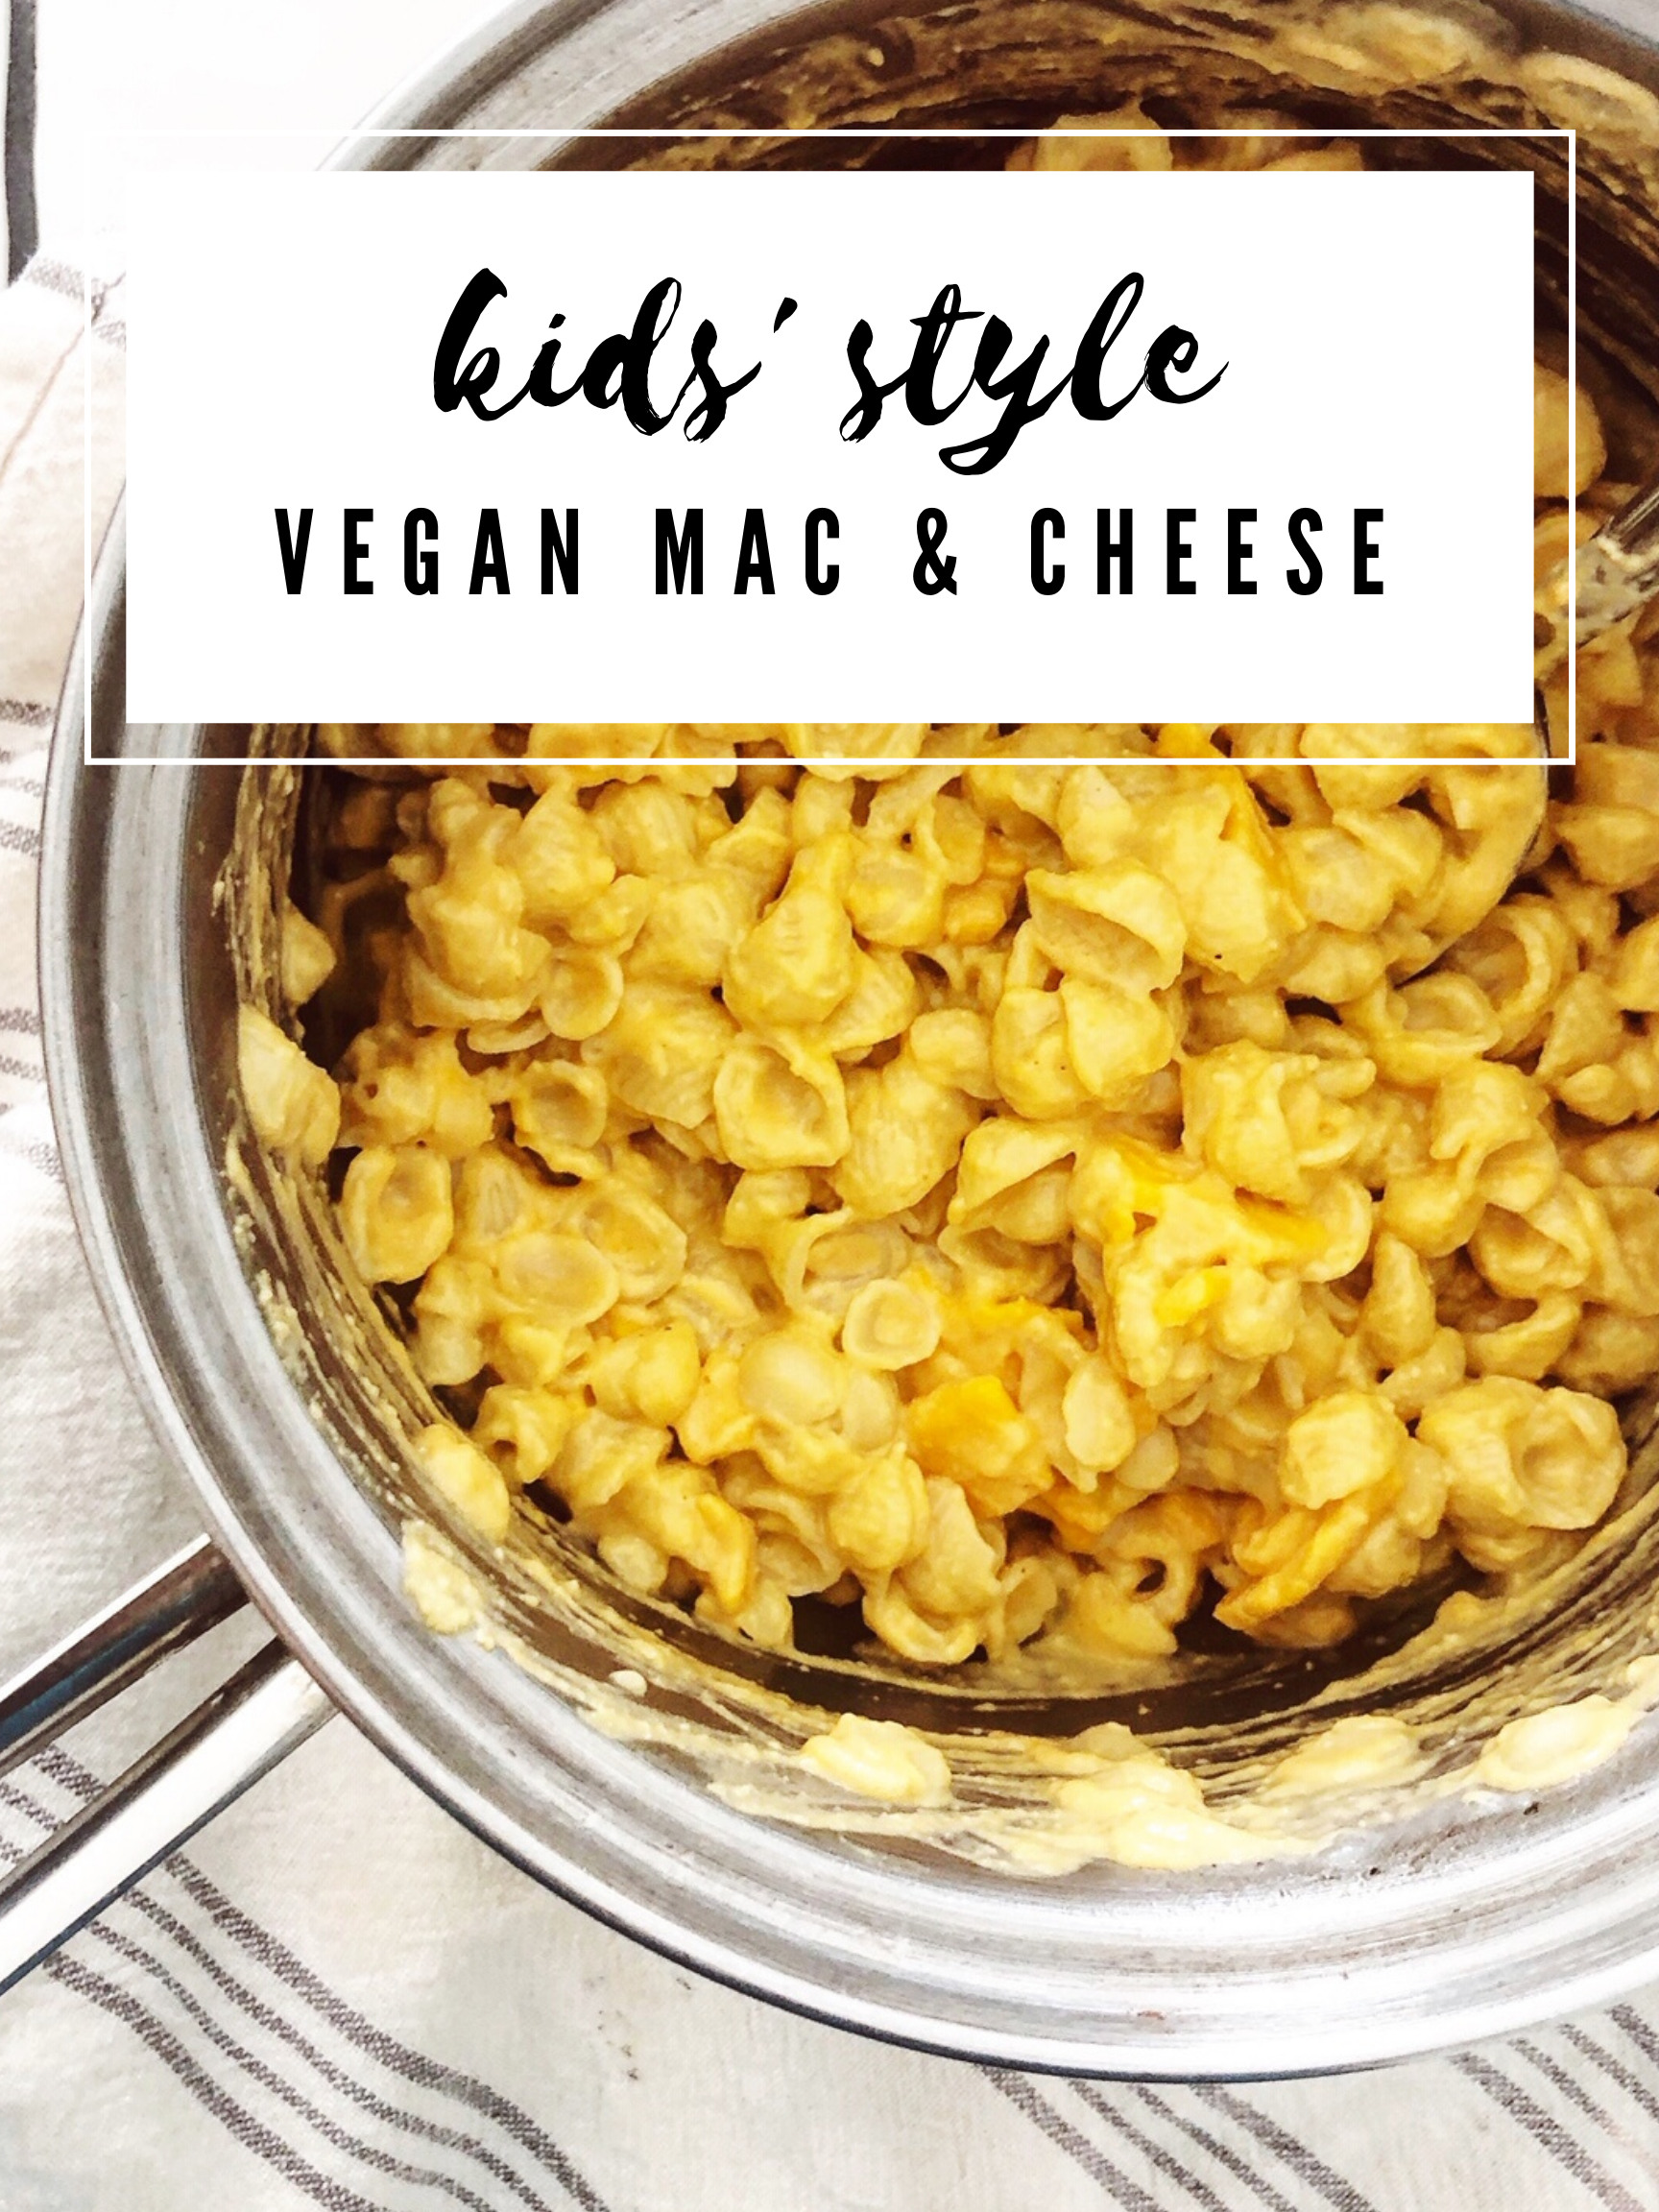 Vegan Mac & Cheese for Kids